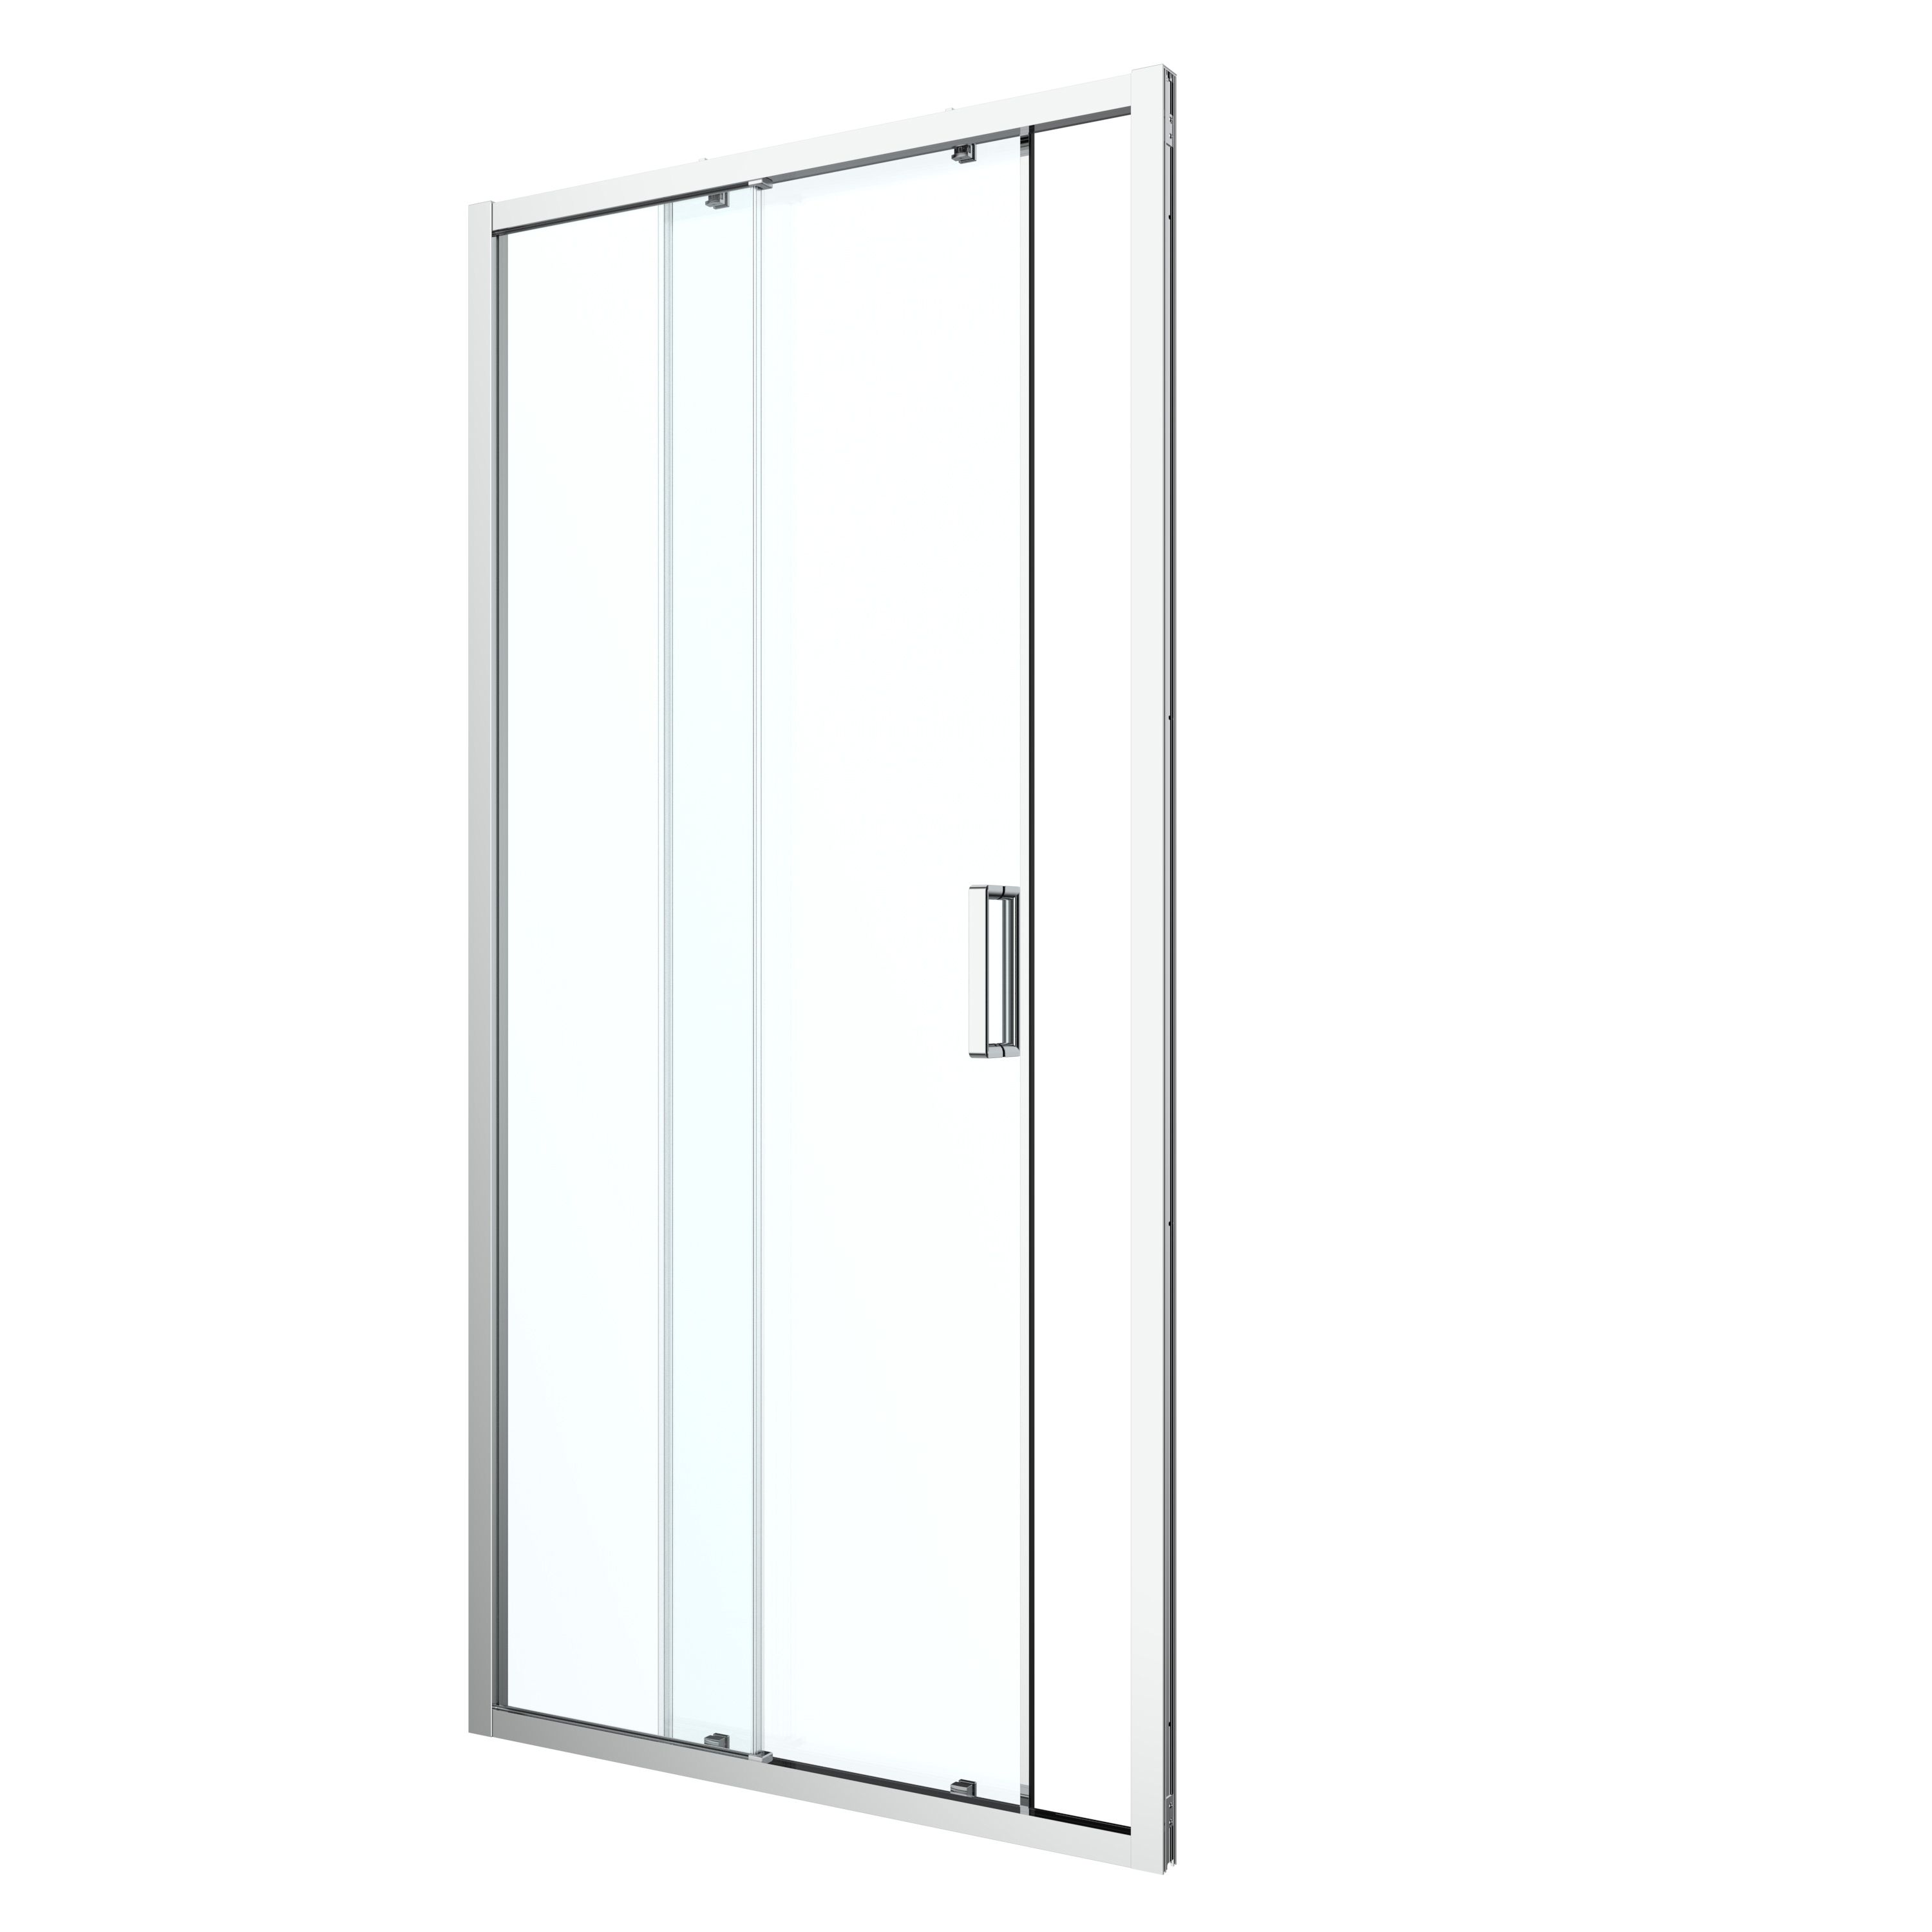 GoodHome Ledava Minimal frame Chrome effect Clear glass Sliding Shower Door (H)195cm (W)100cm